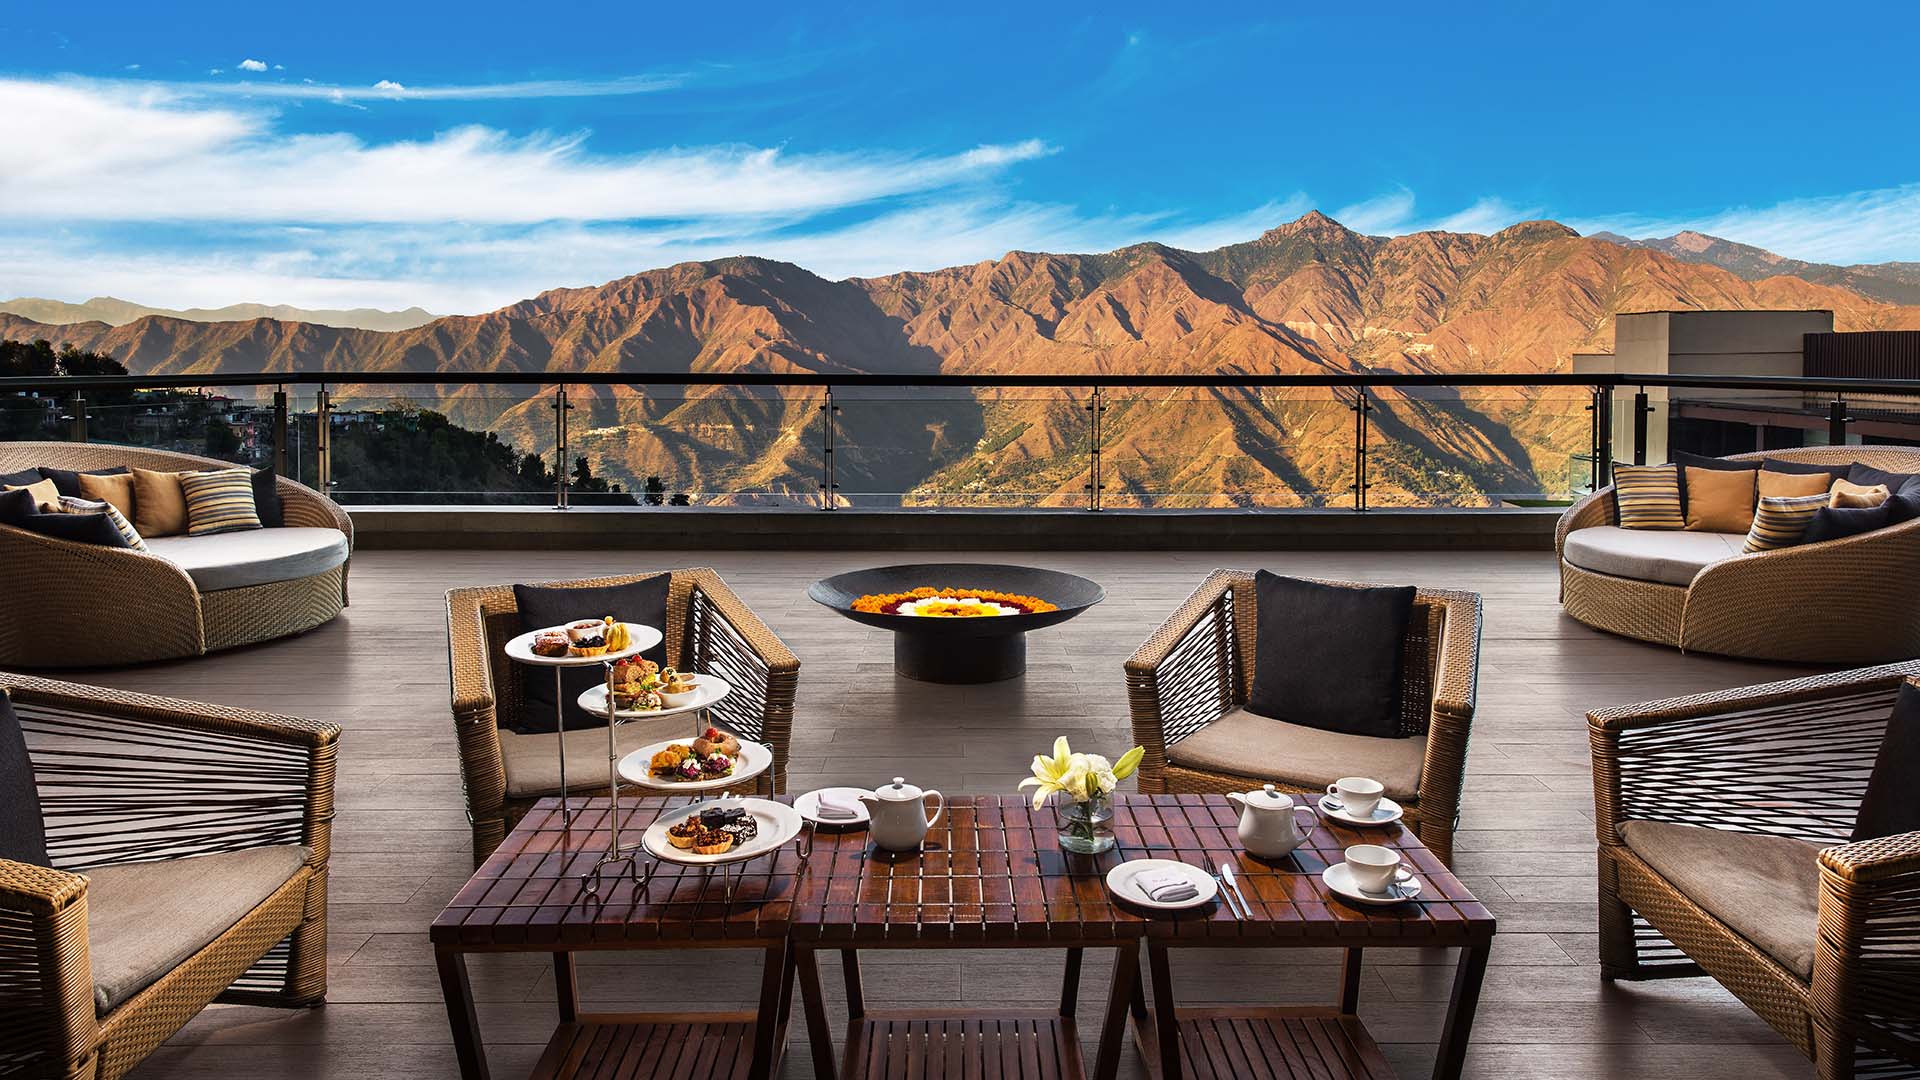 Afternoon tea on a deck overlooking Mussoorie's hills at the JW Marriott Mussoorie Walnut Grove Resort & Spa in India